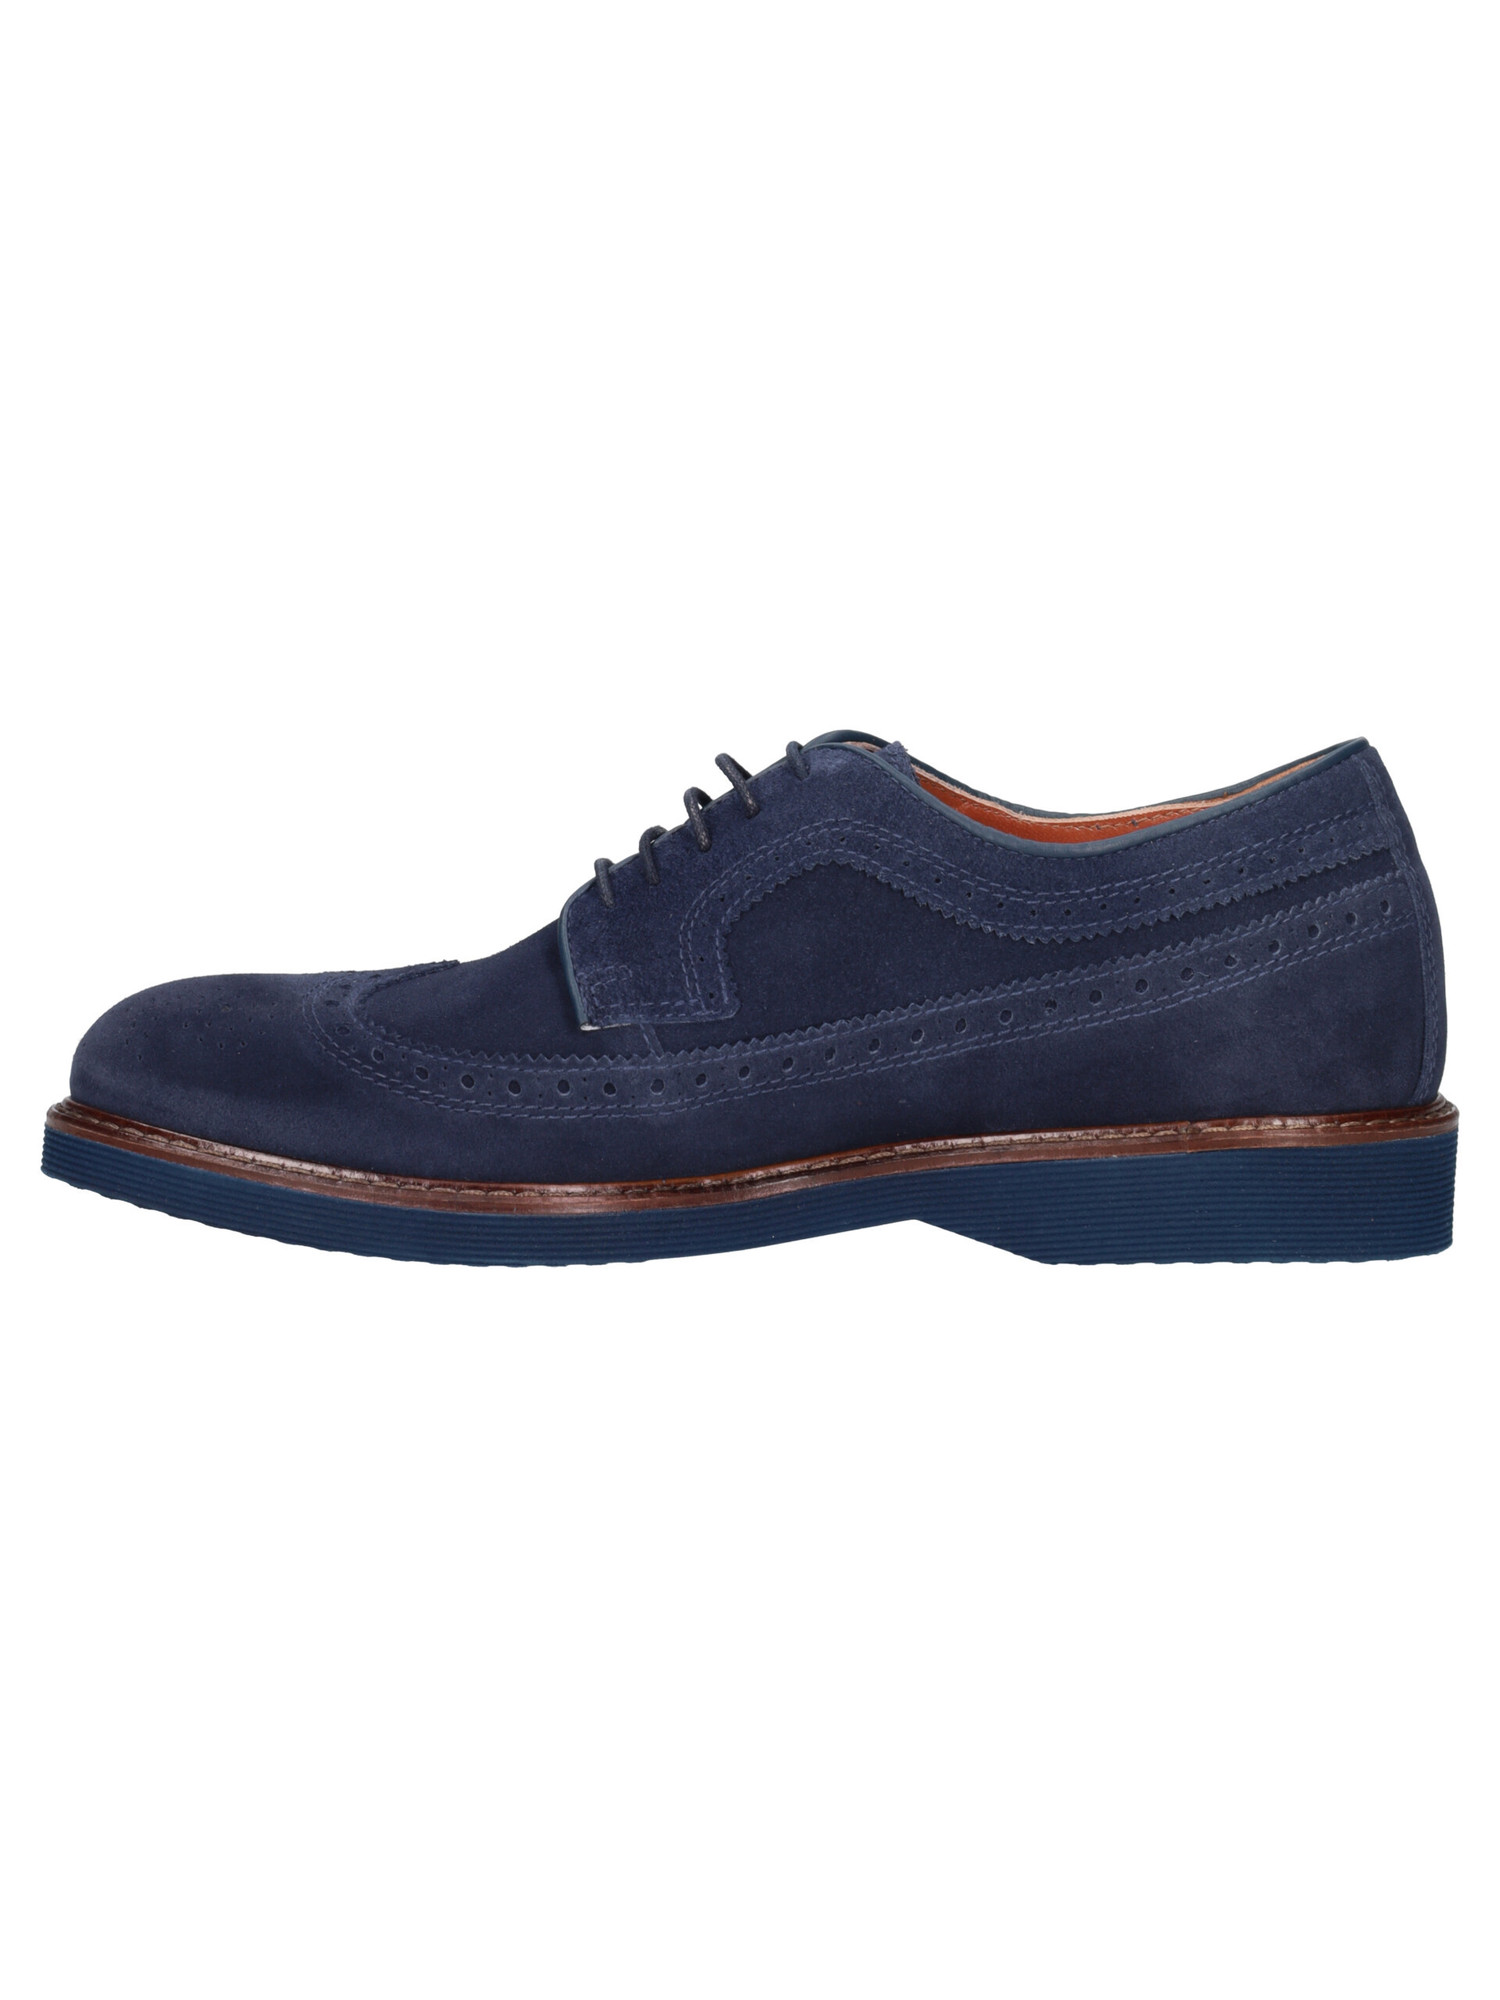 scarpa-stringata-nero-giardini-da-uomo-blu-661b8c